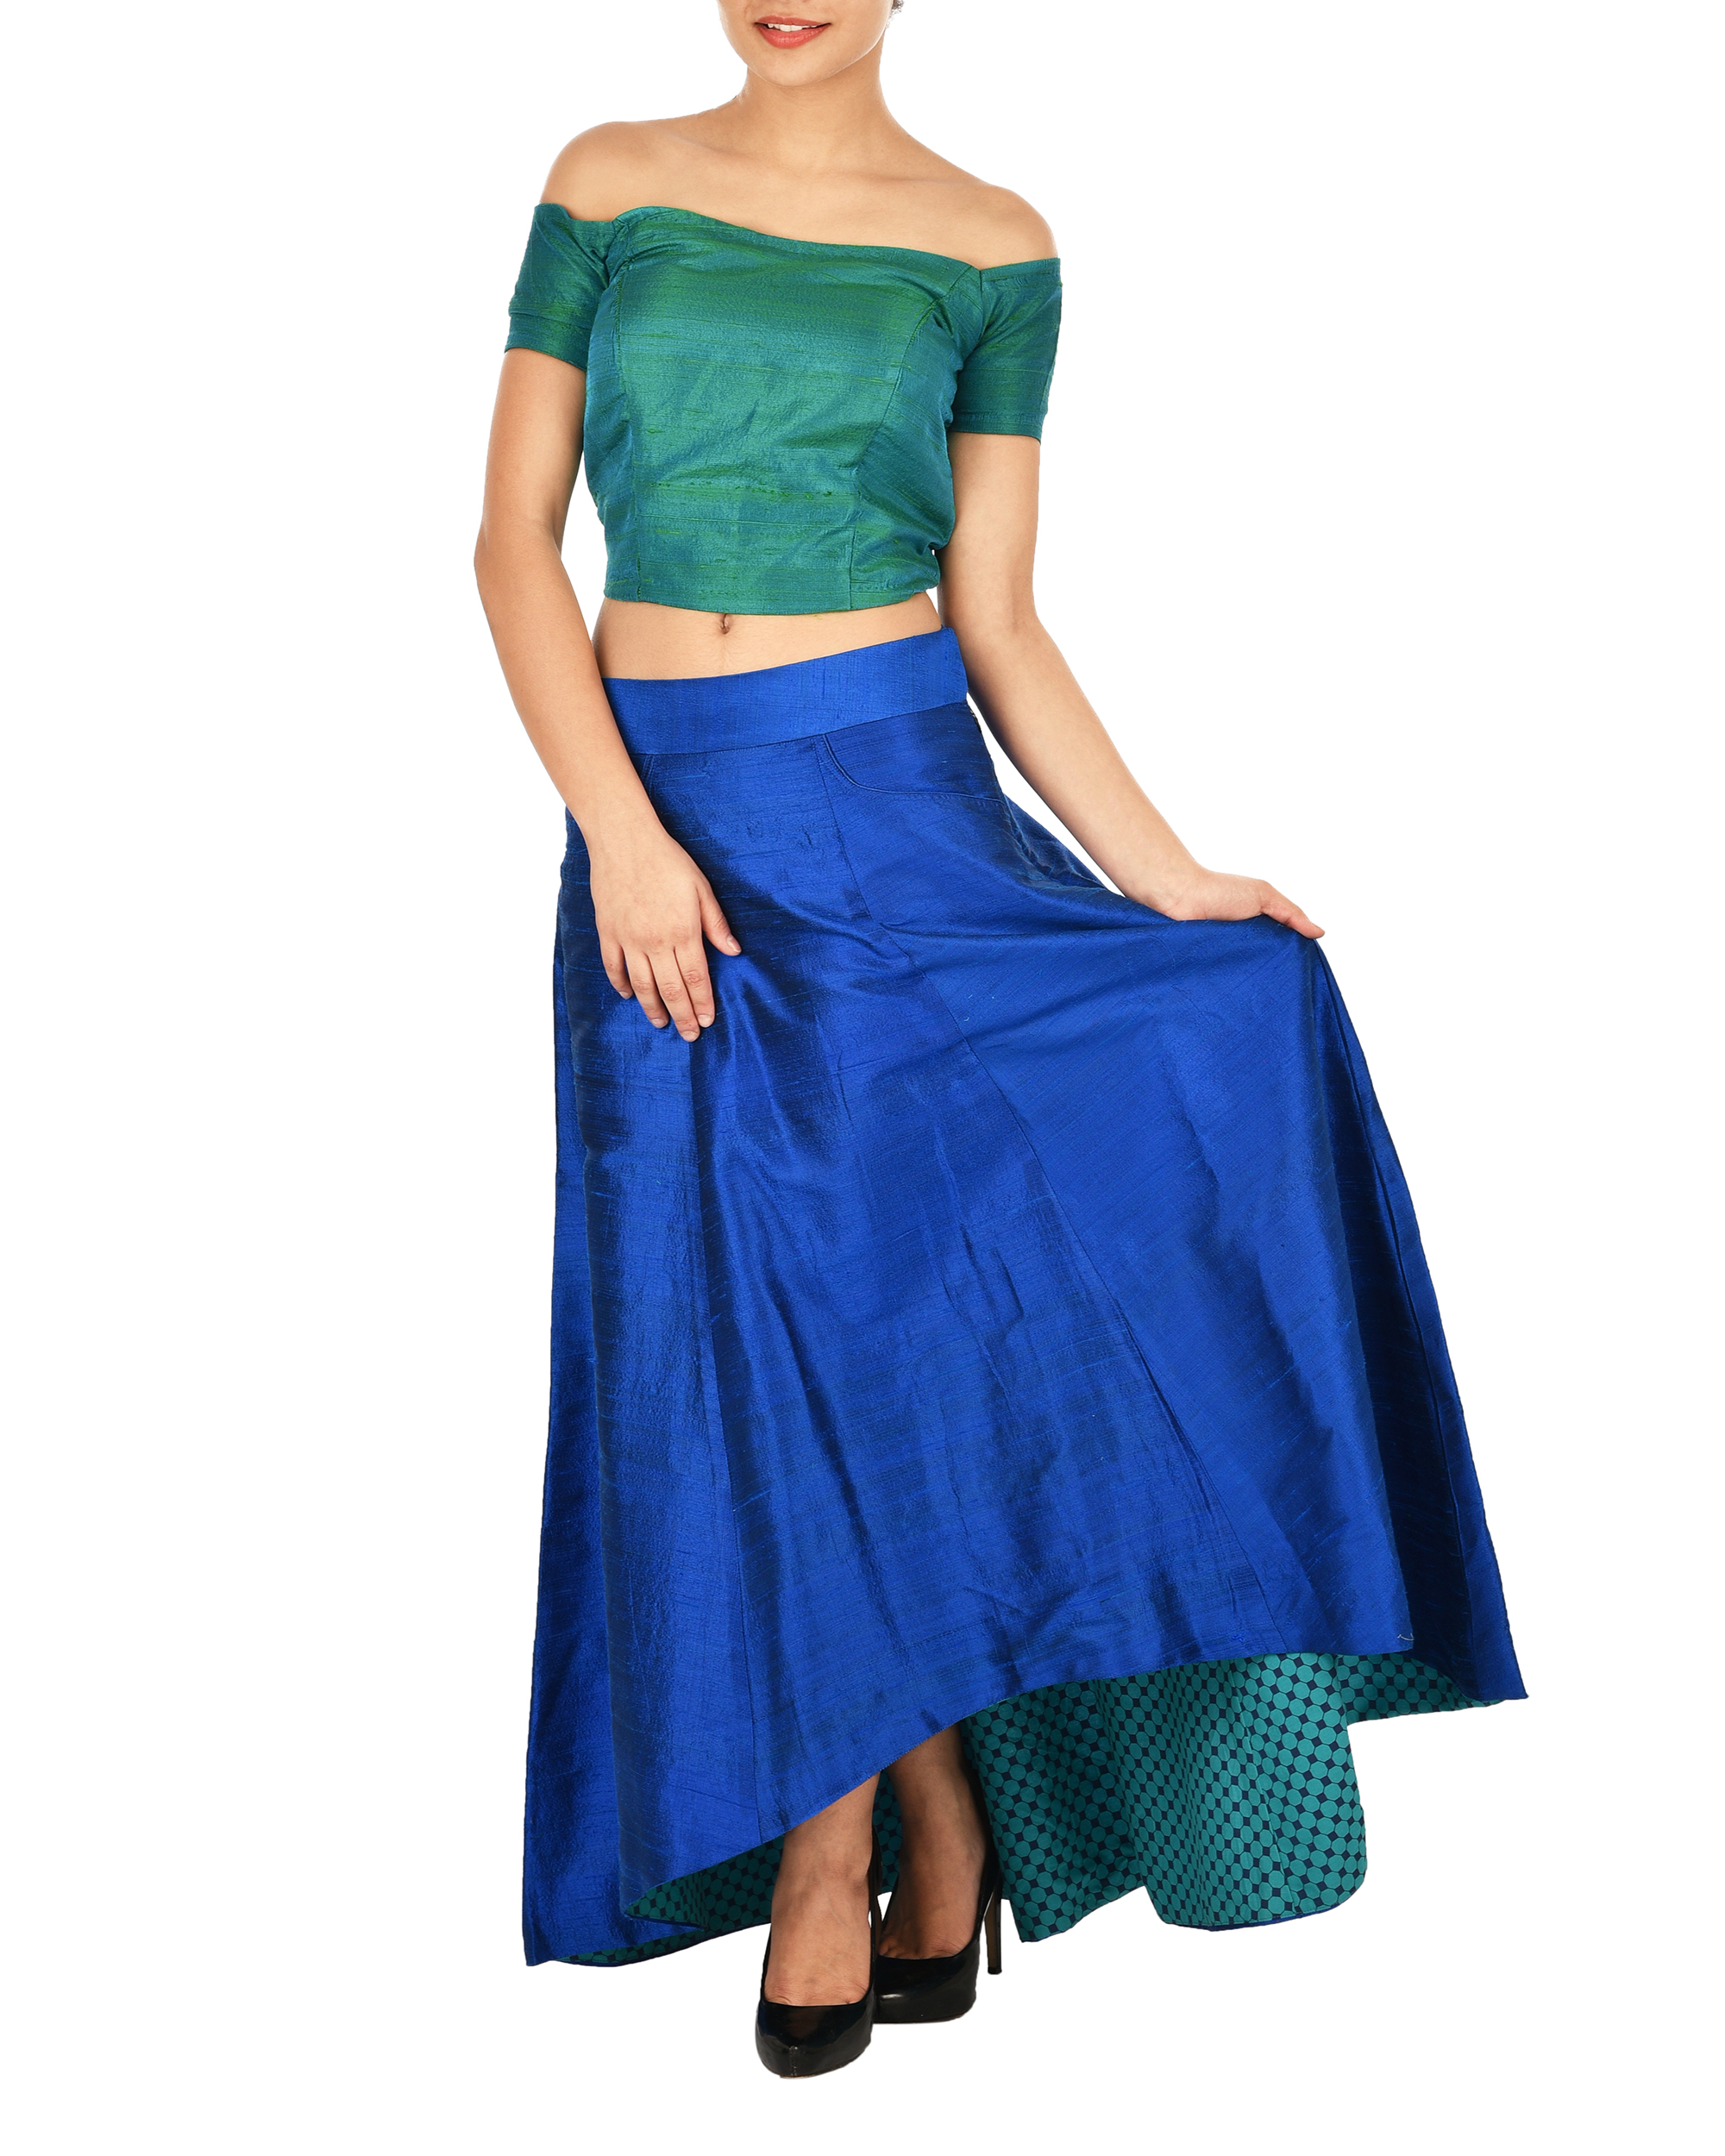 New CANARI Women's Plus Size Knee Length Blue Peacock Skirt | eBay